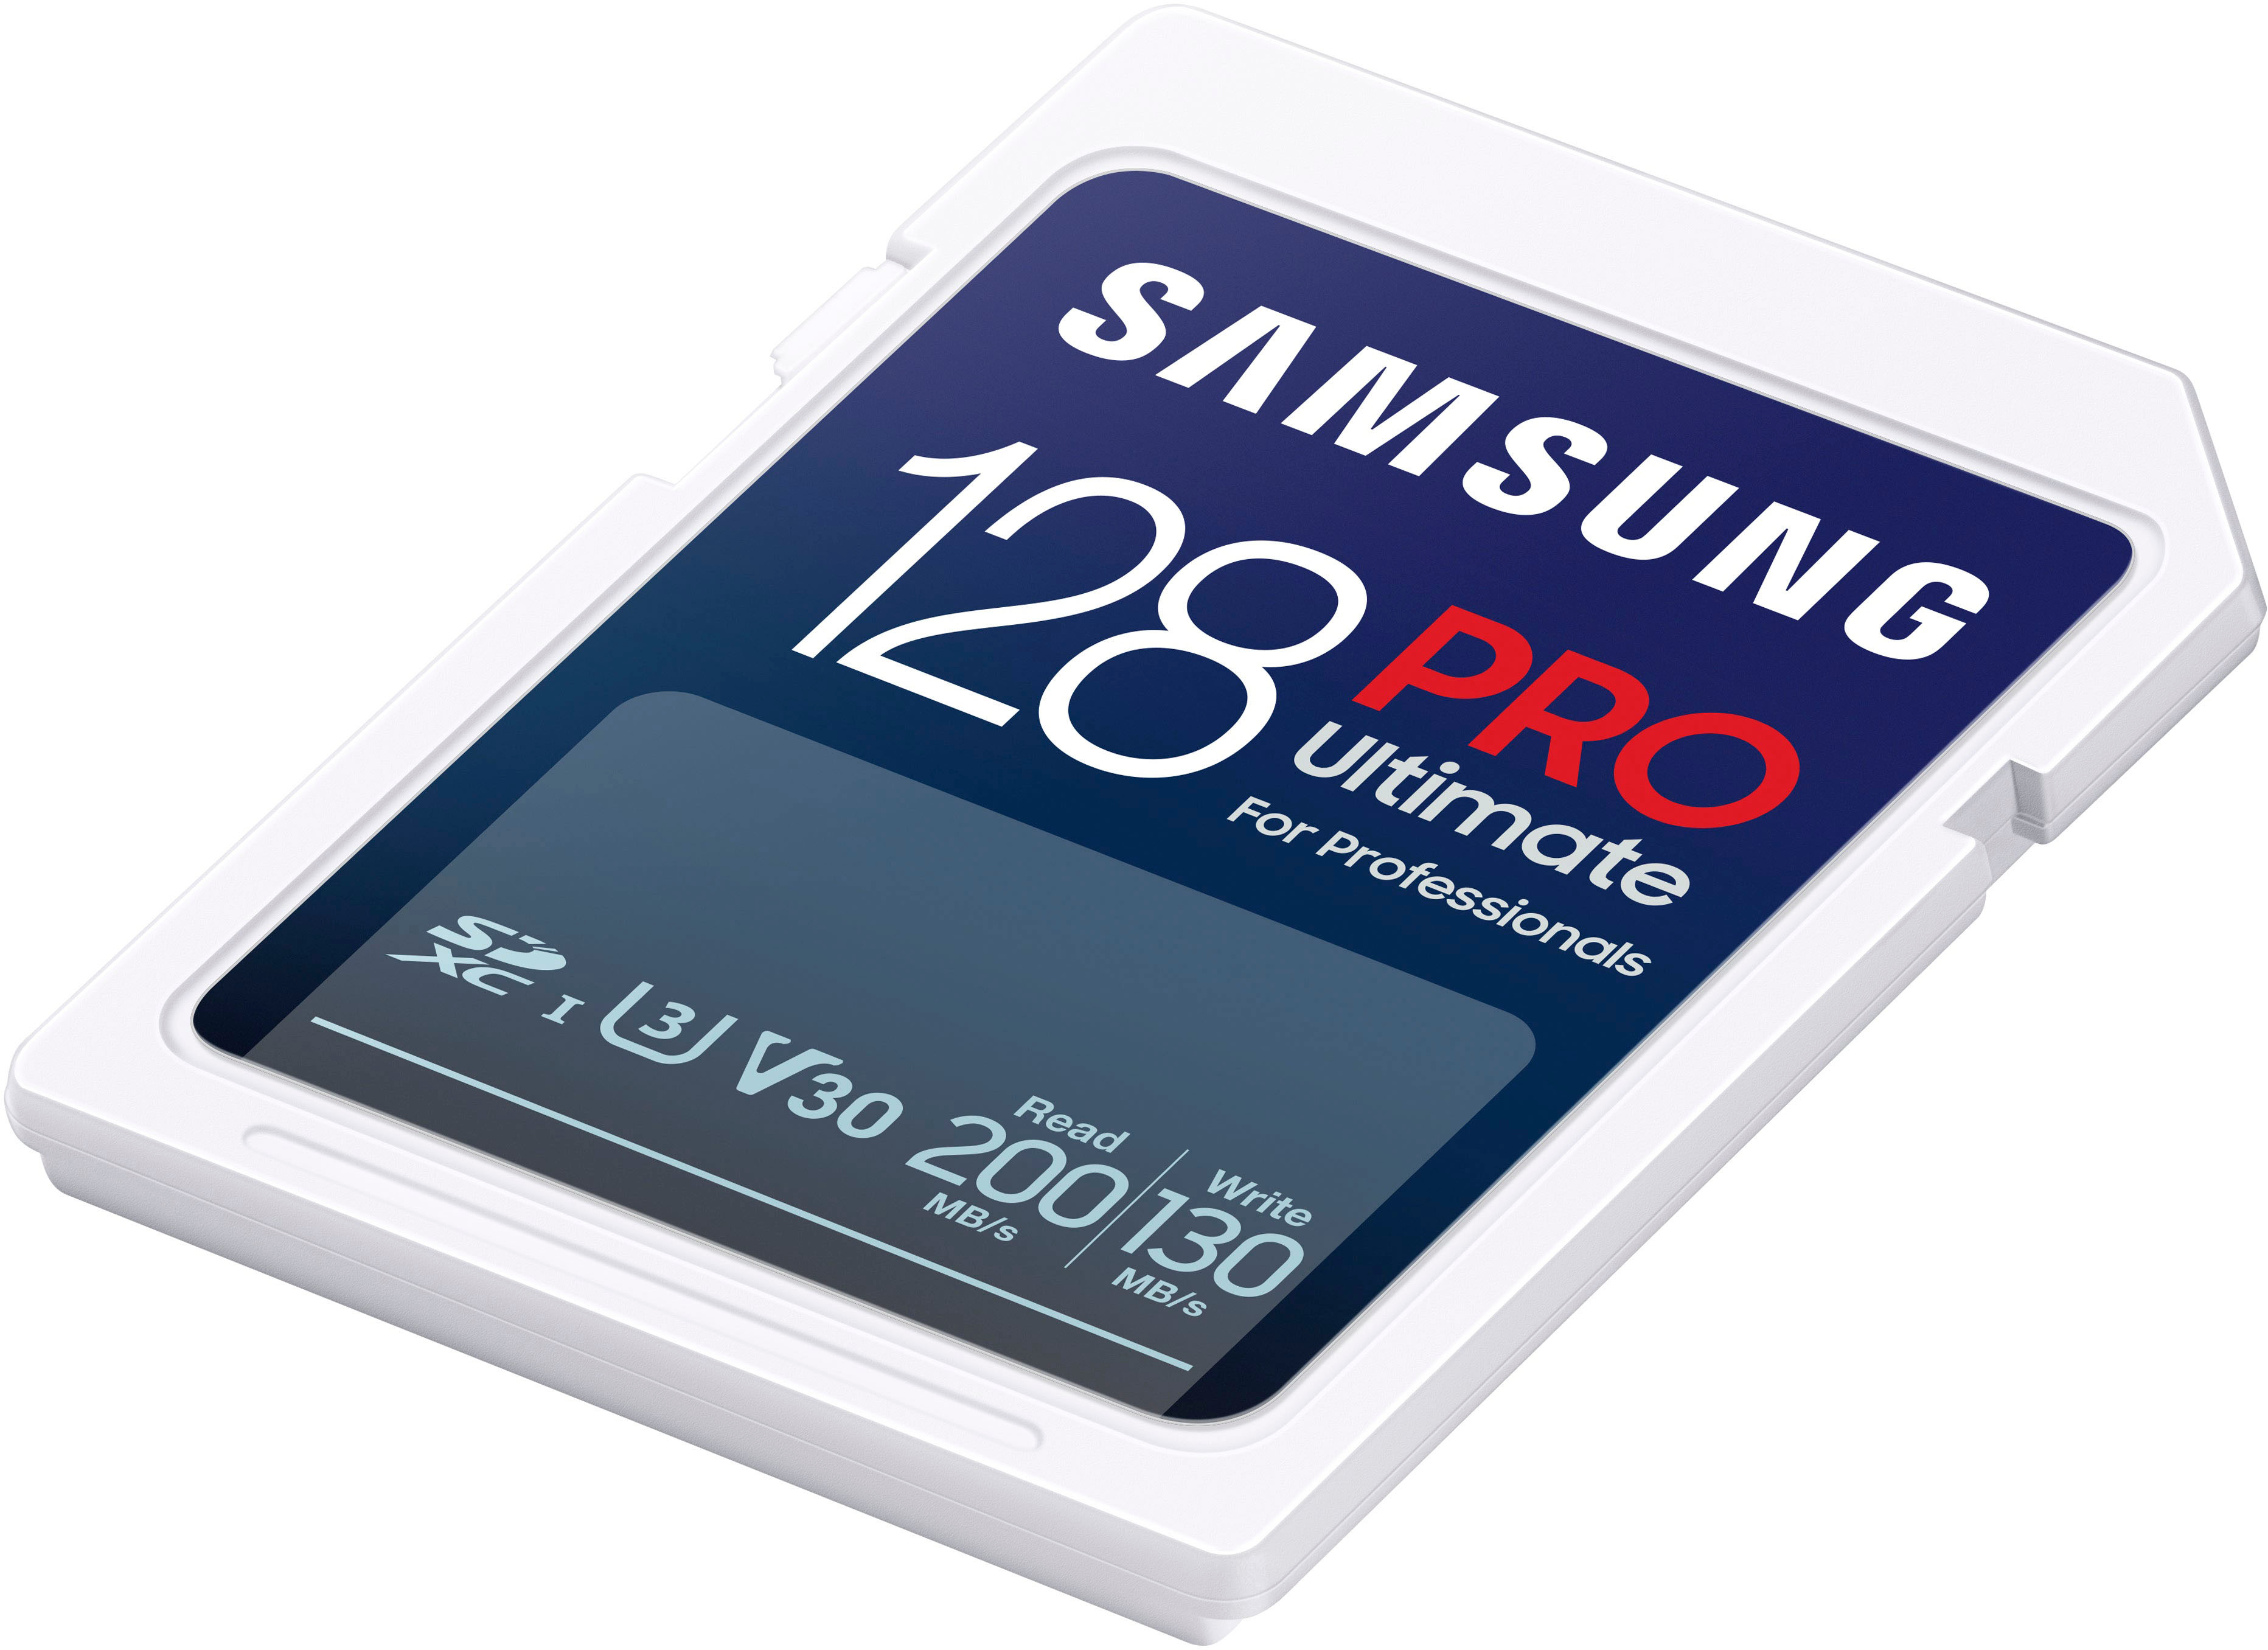 Samsung - Pro Ultimate 128GB SDXC Memory Card